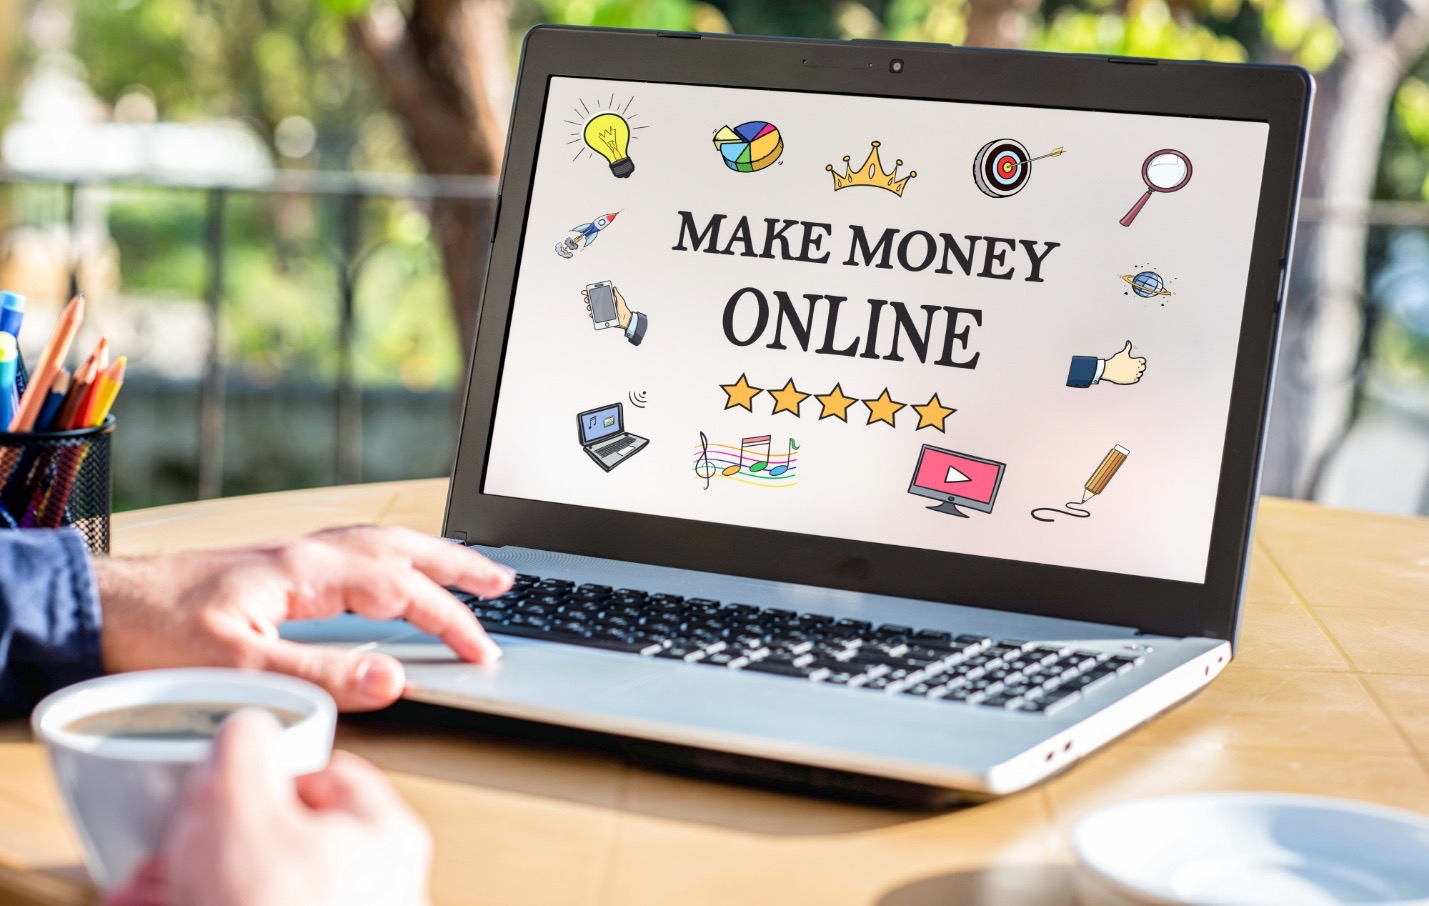 Making money online: 5 mistakes to avoid for beginners - AZ Big Media